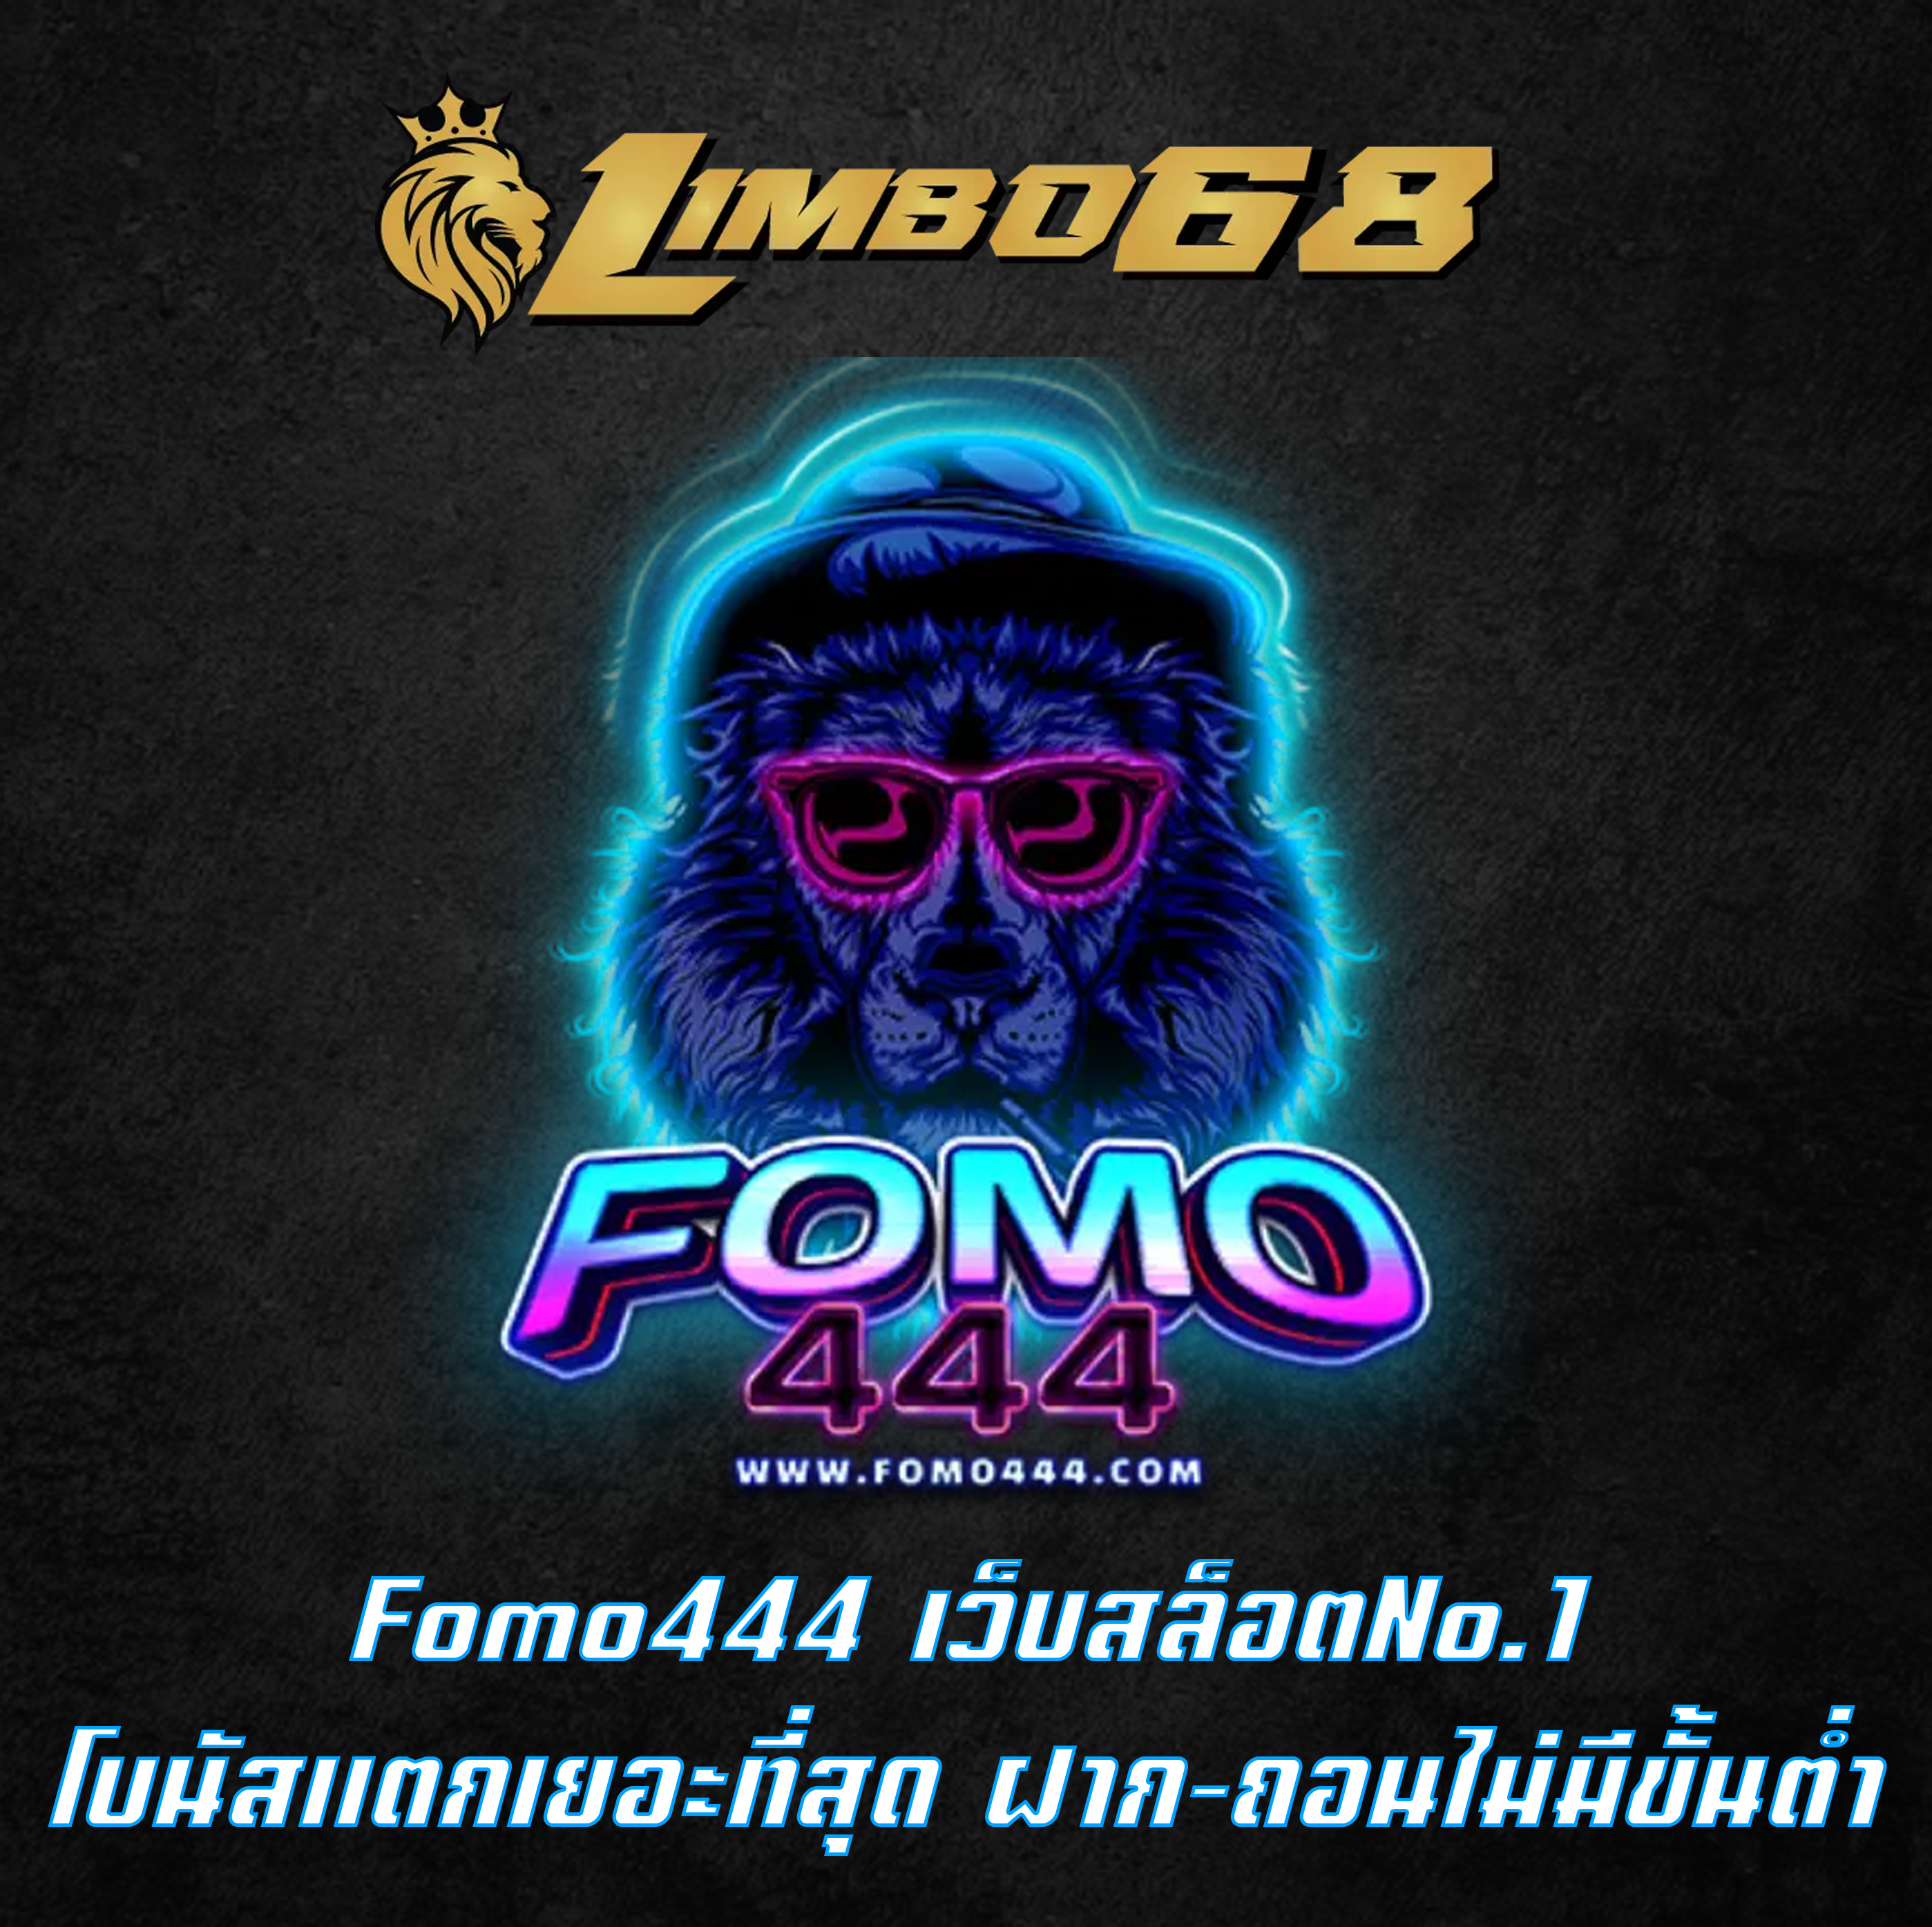 Fomo444 เว็บสล็อตNo.1 โบนัสแตกเยอะที่สุด ฝาก-ถอนไม่มีขั้นต่ำ